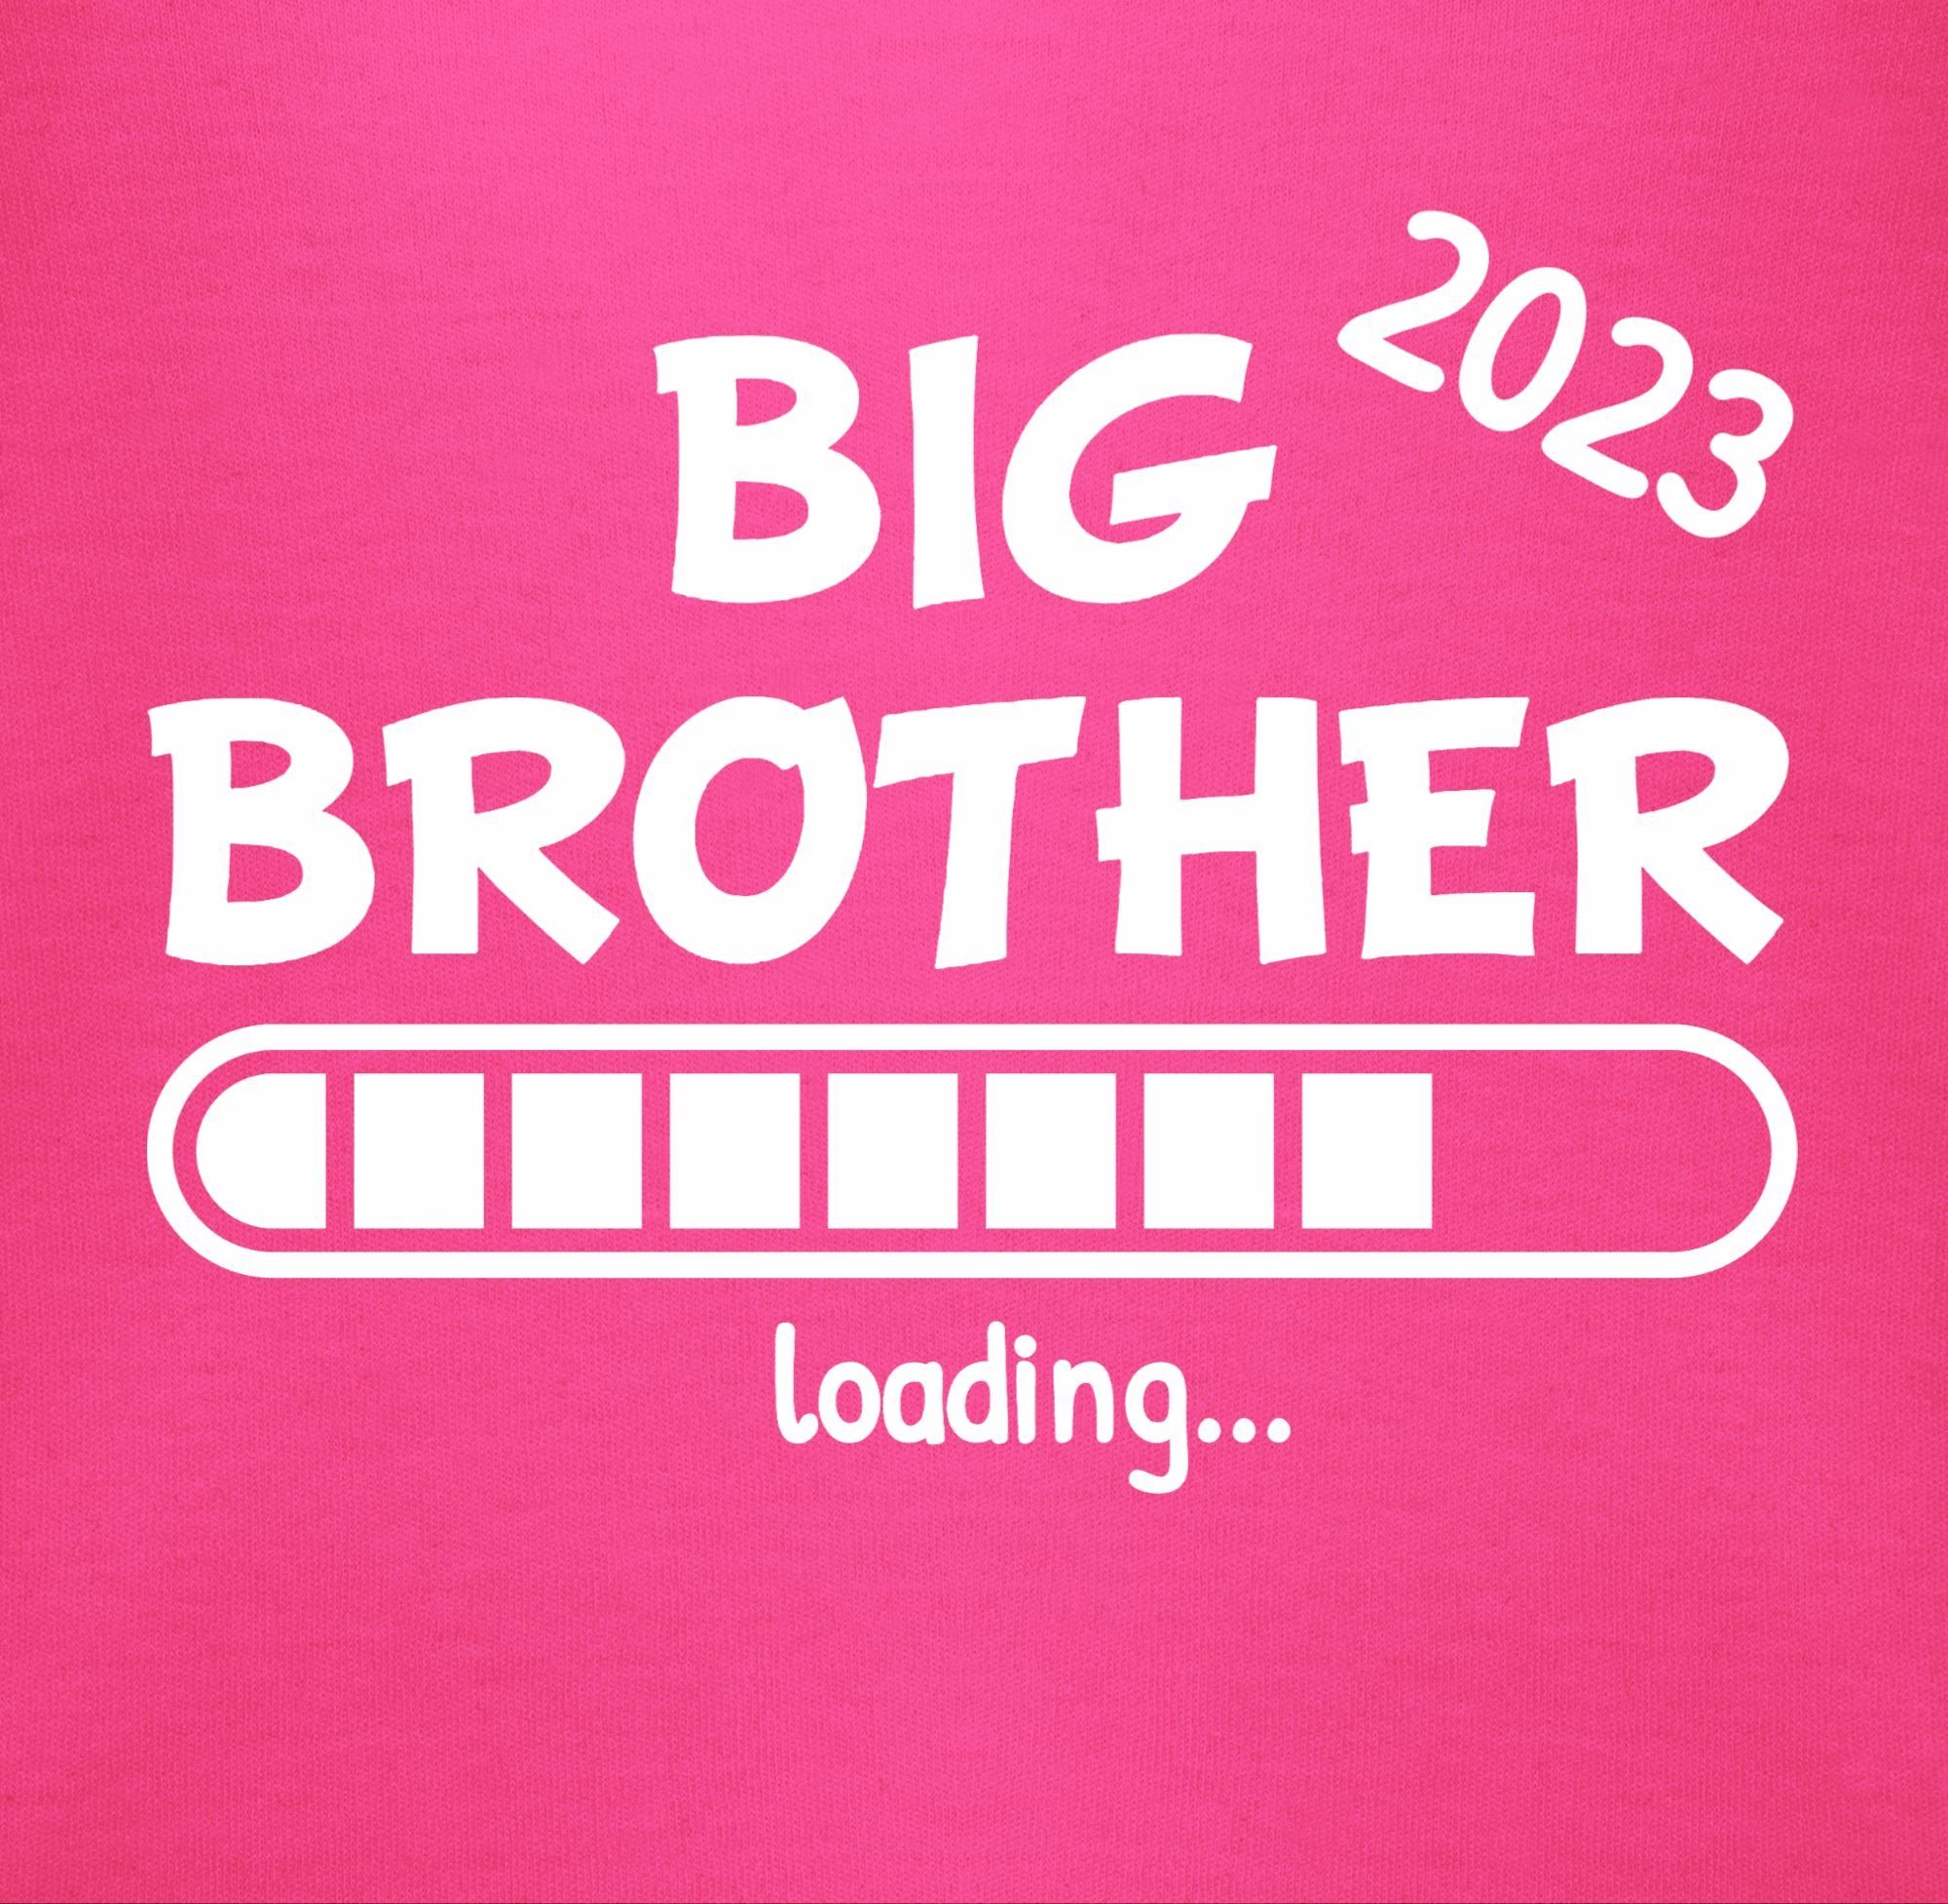 Bruder Großer Brother Shirtbody Big 2023 3 loading Shirtracer Fuchsia